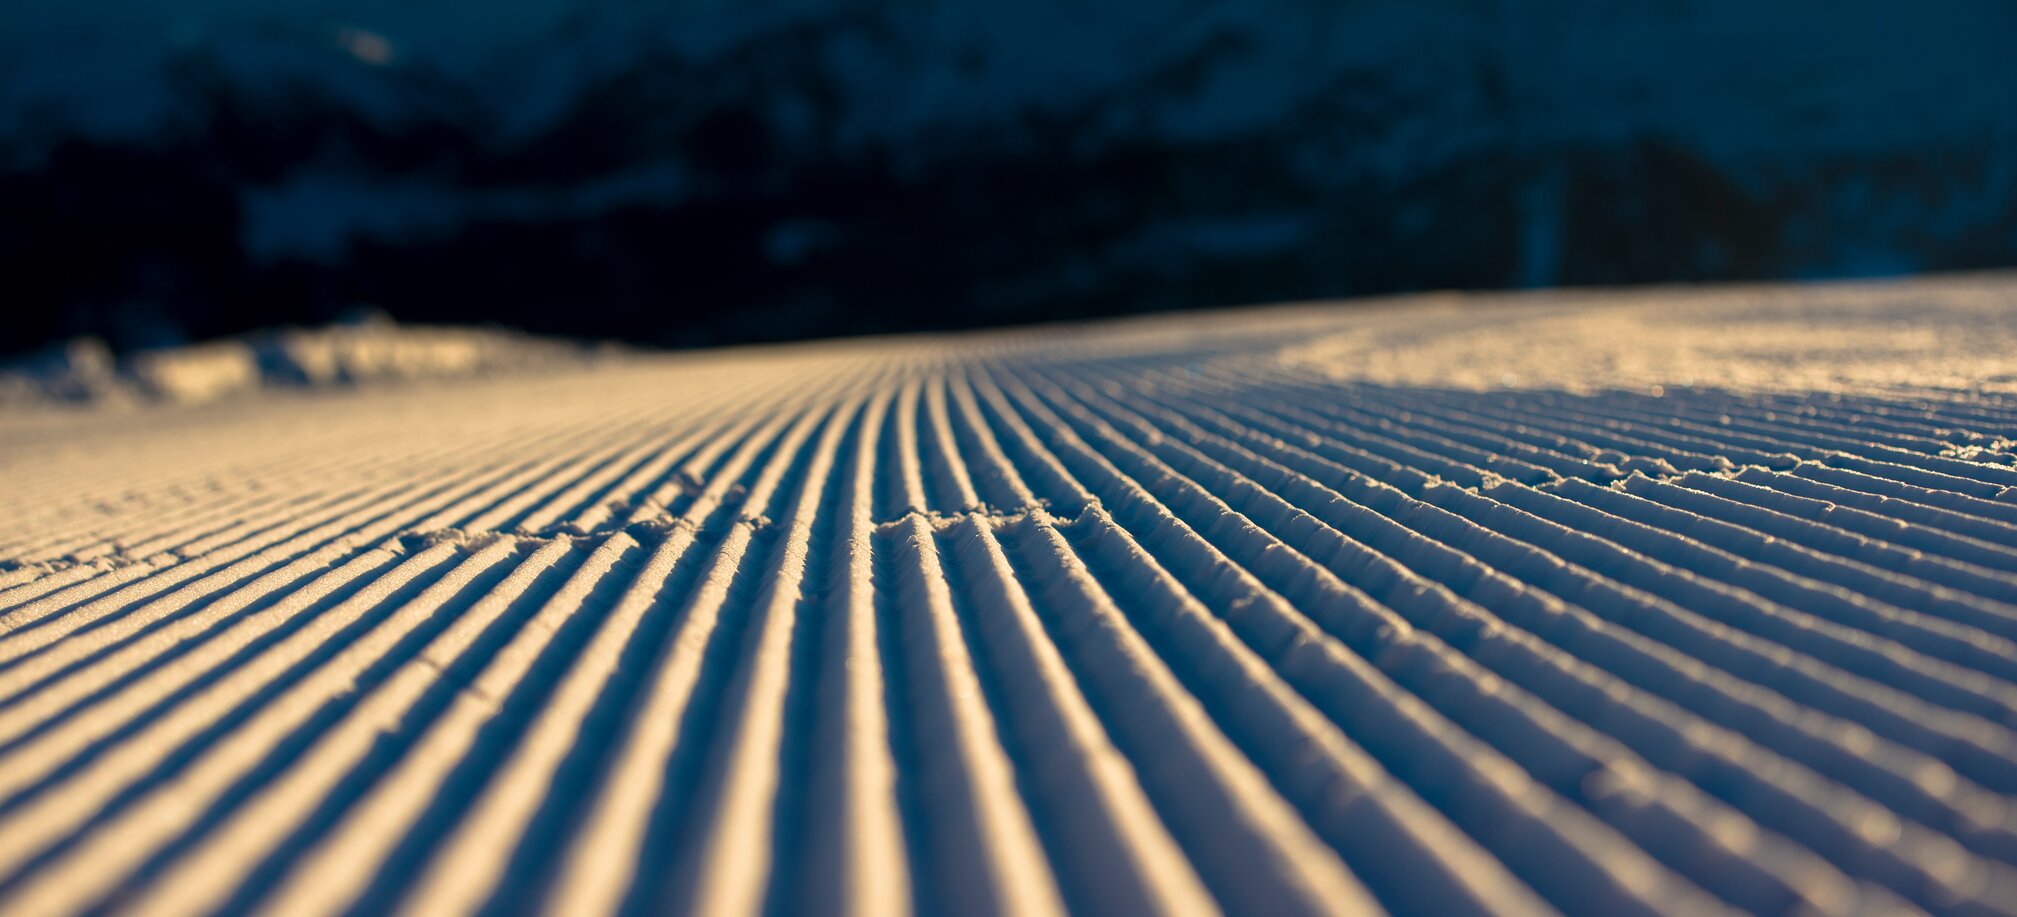 Perfekt präparierte Skipisten in Ski amadé